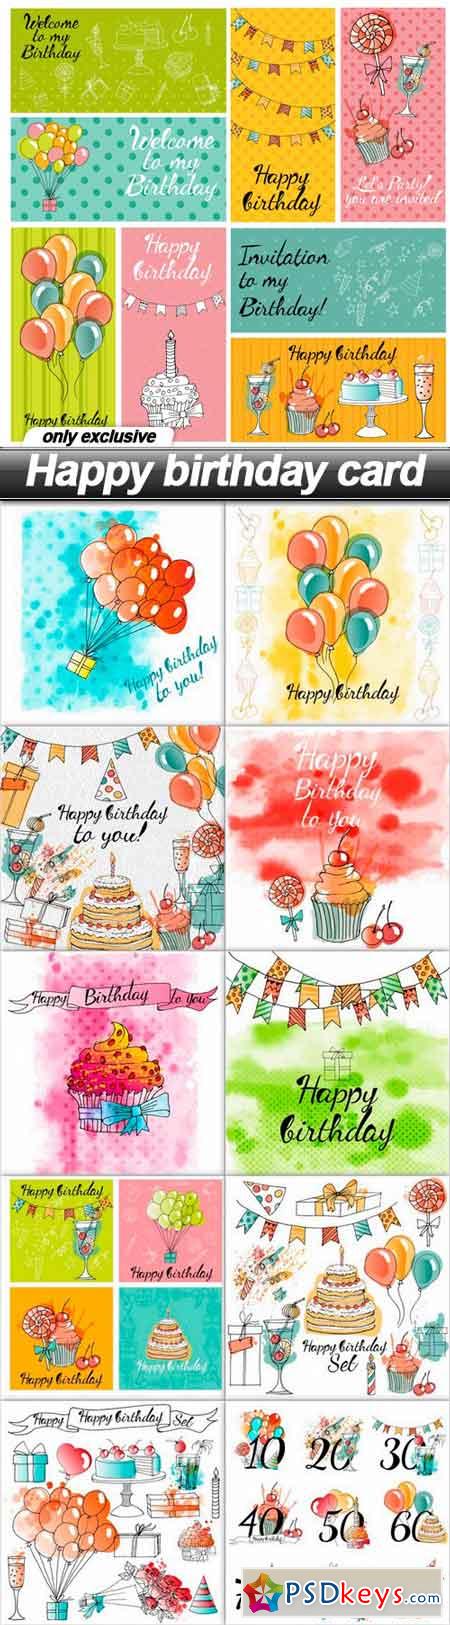 Happy birthday card - 11 EPS